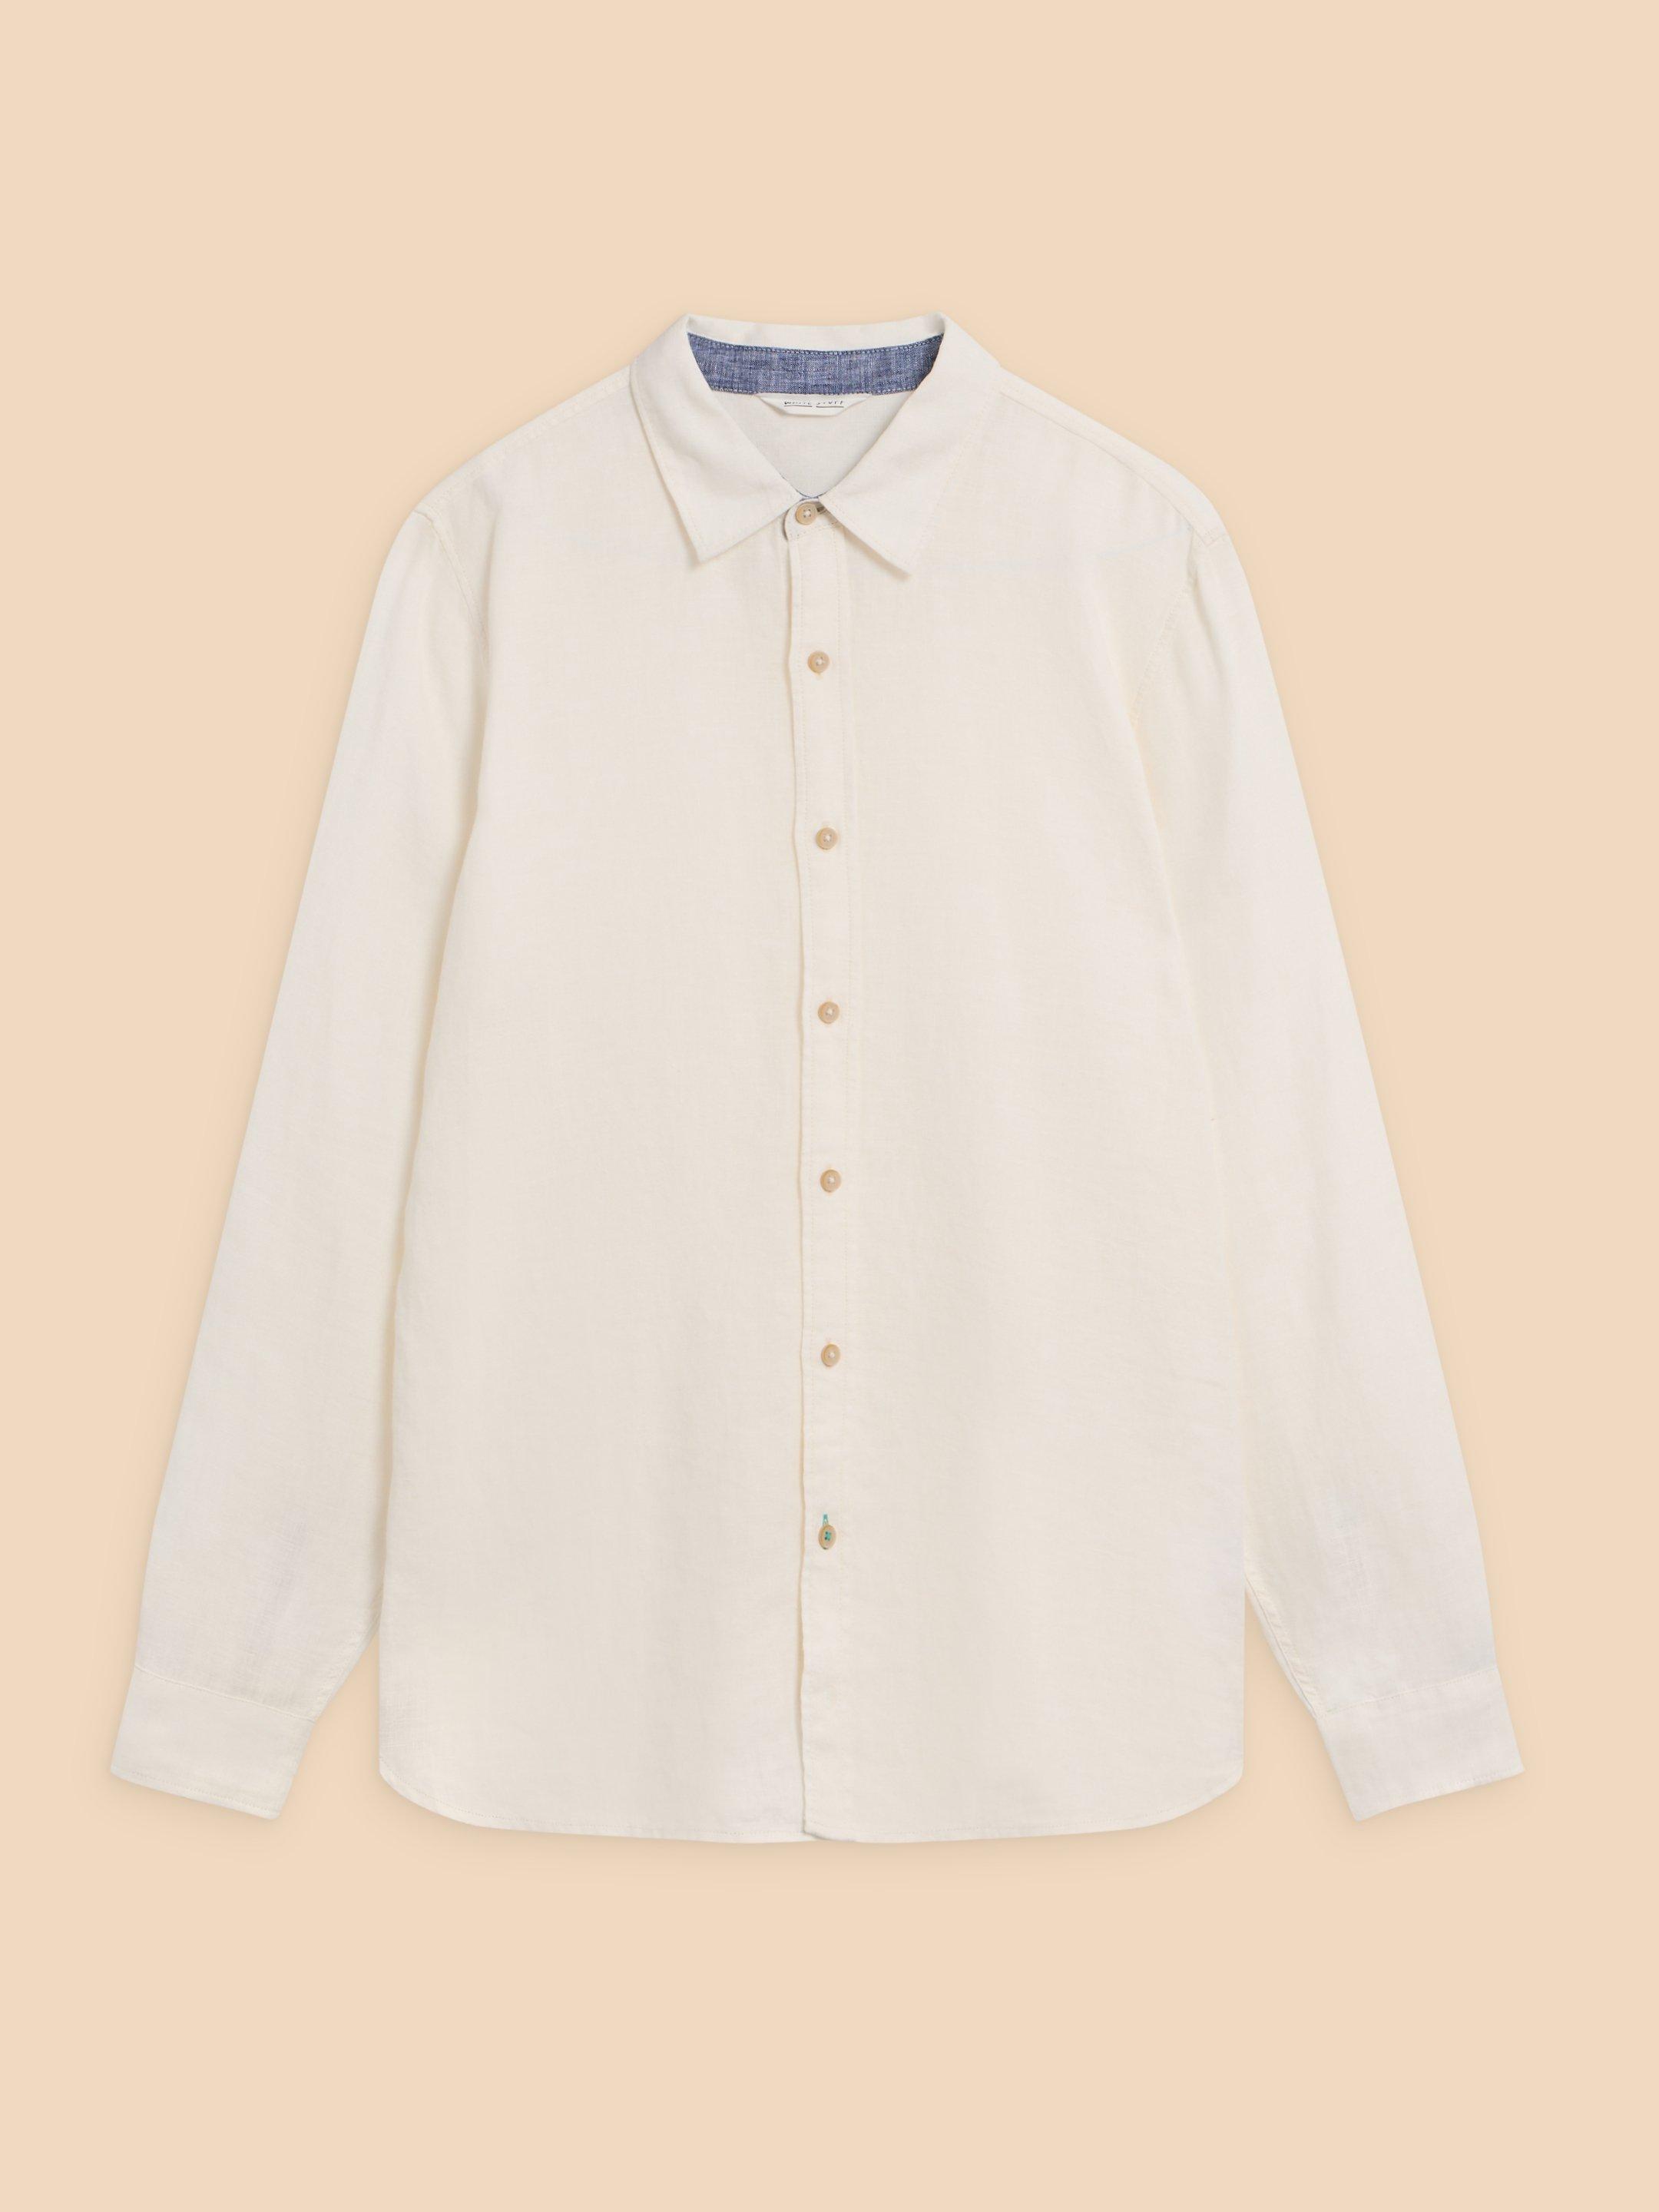 Pembroke LS Linen Shirt in BRIL WHITE - FLAT FRONT